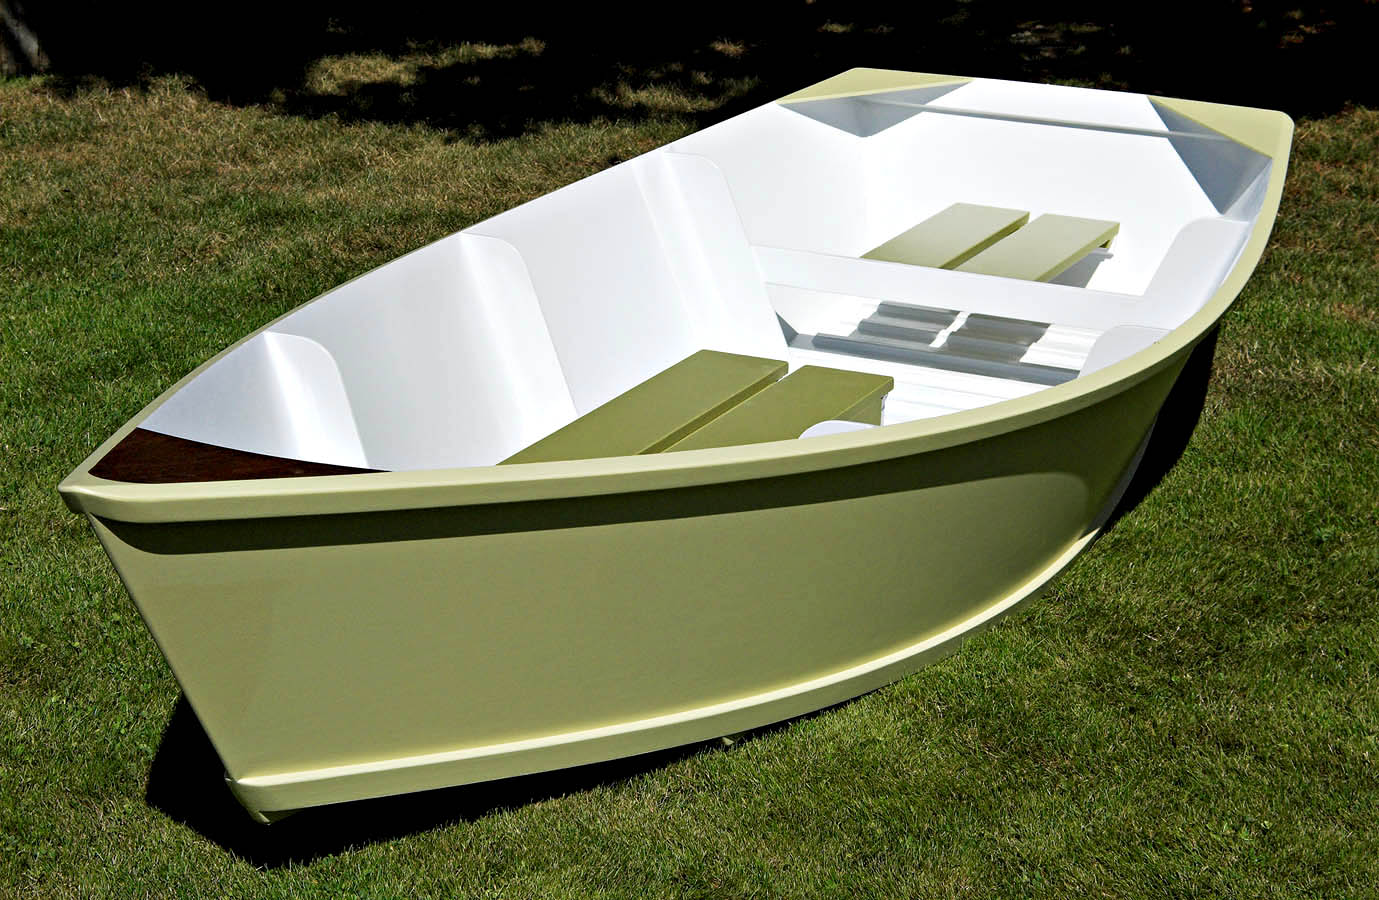 Flat Bottom Boat Plans